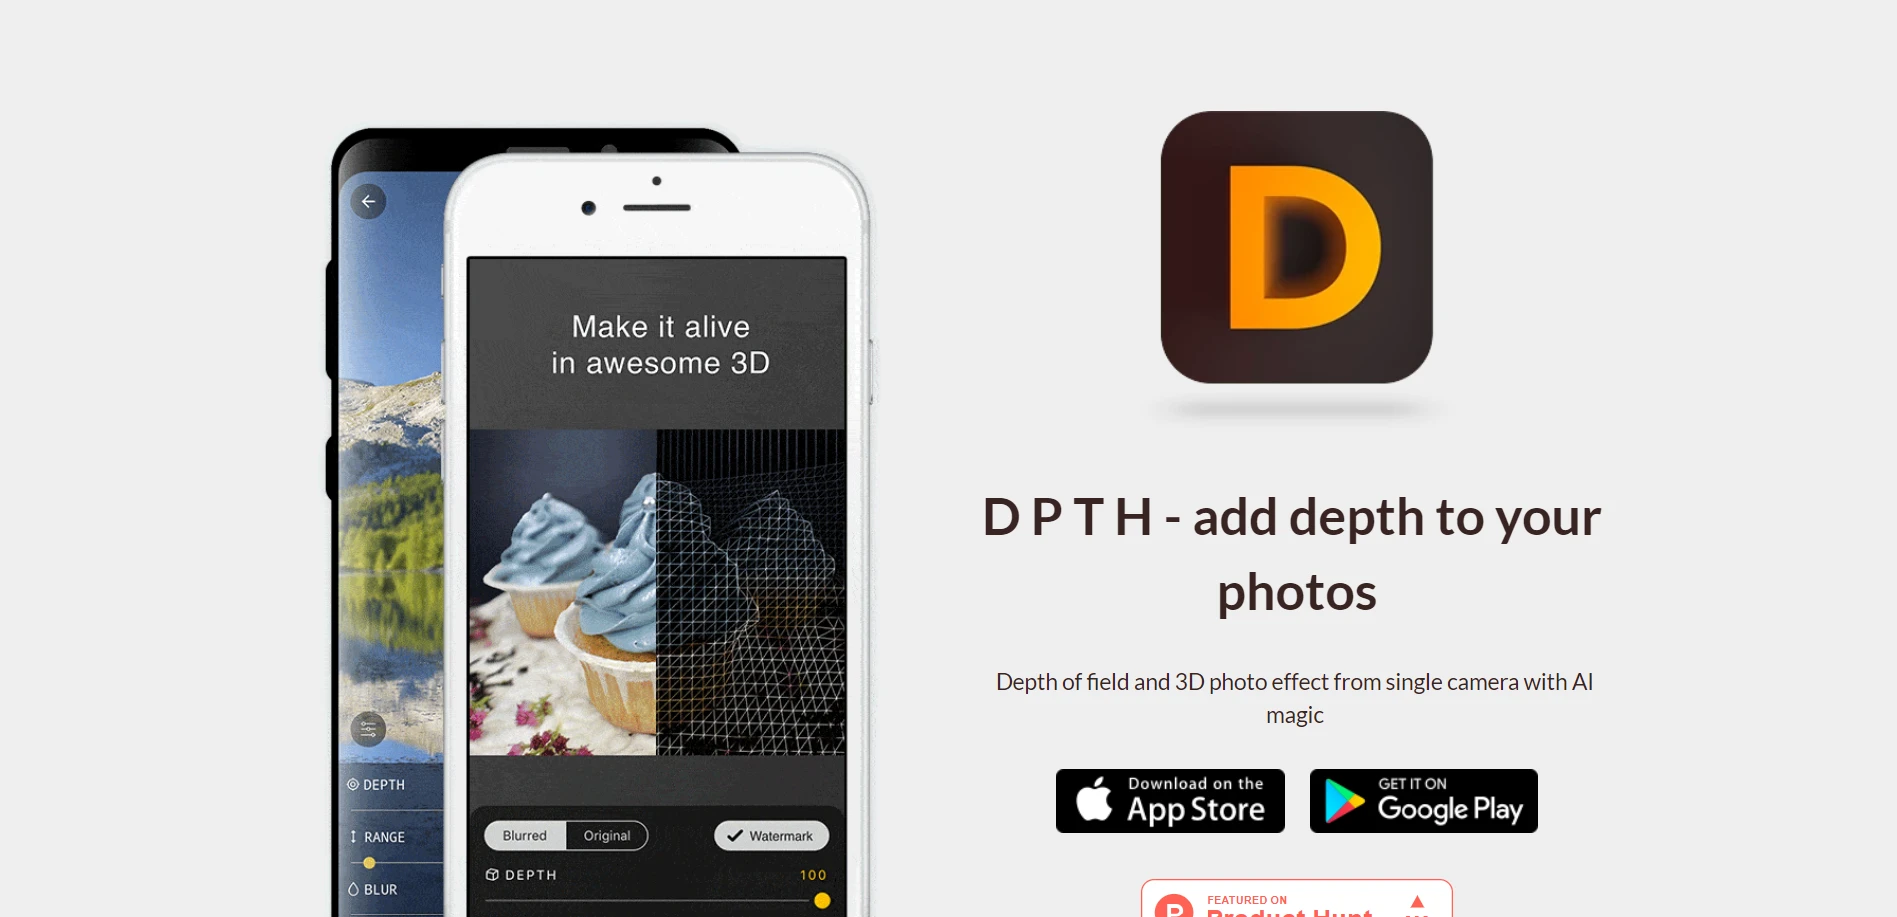 DPTHwebsite picture